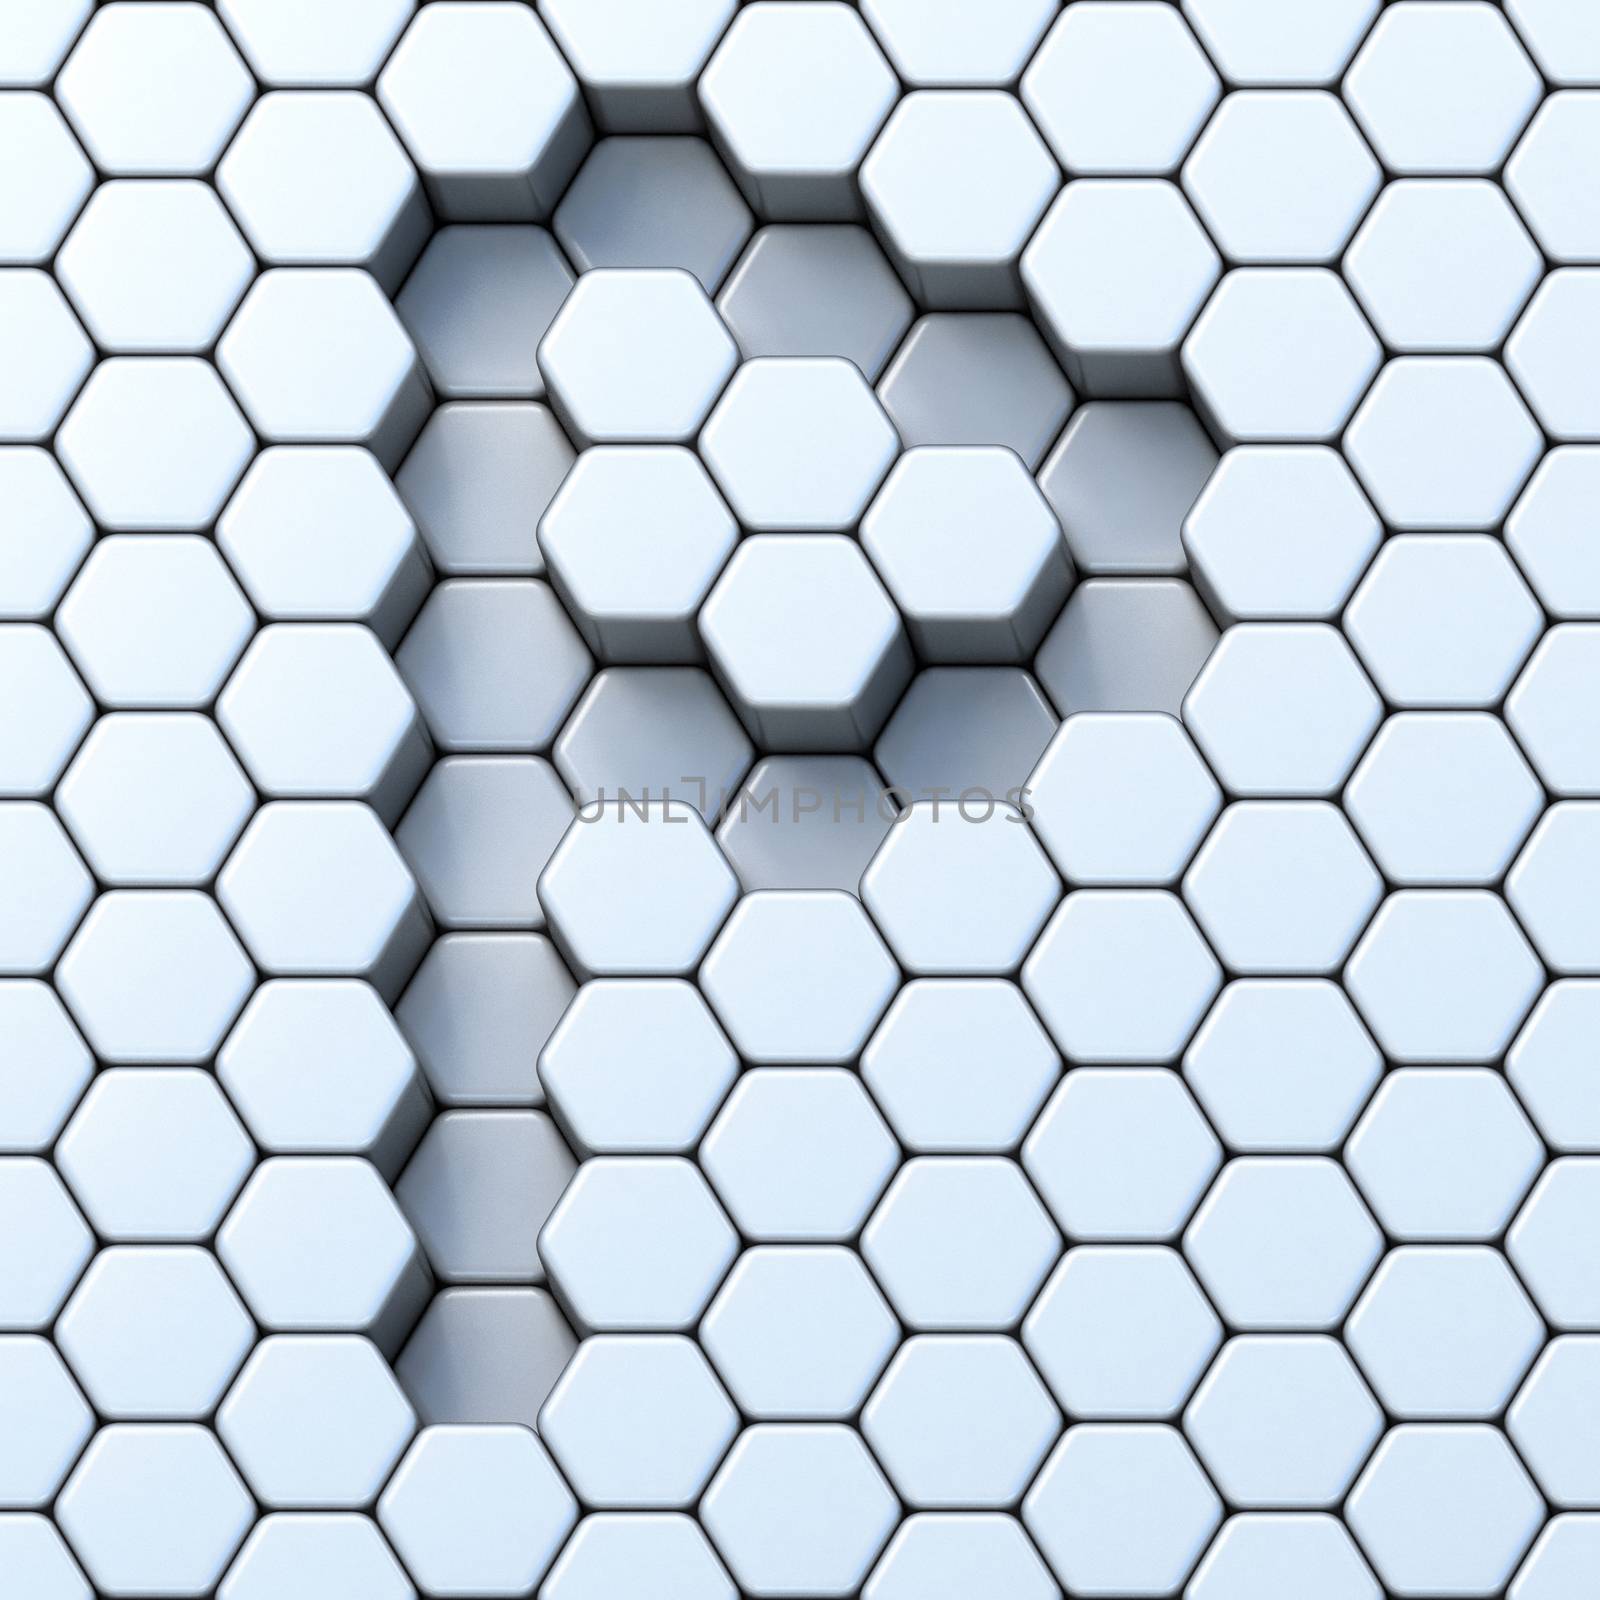 Hexagonal grid letter P 3D by djmilic